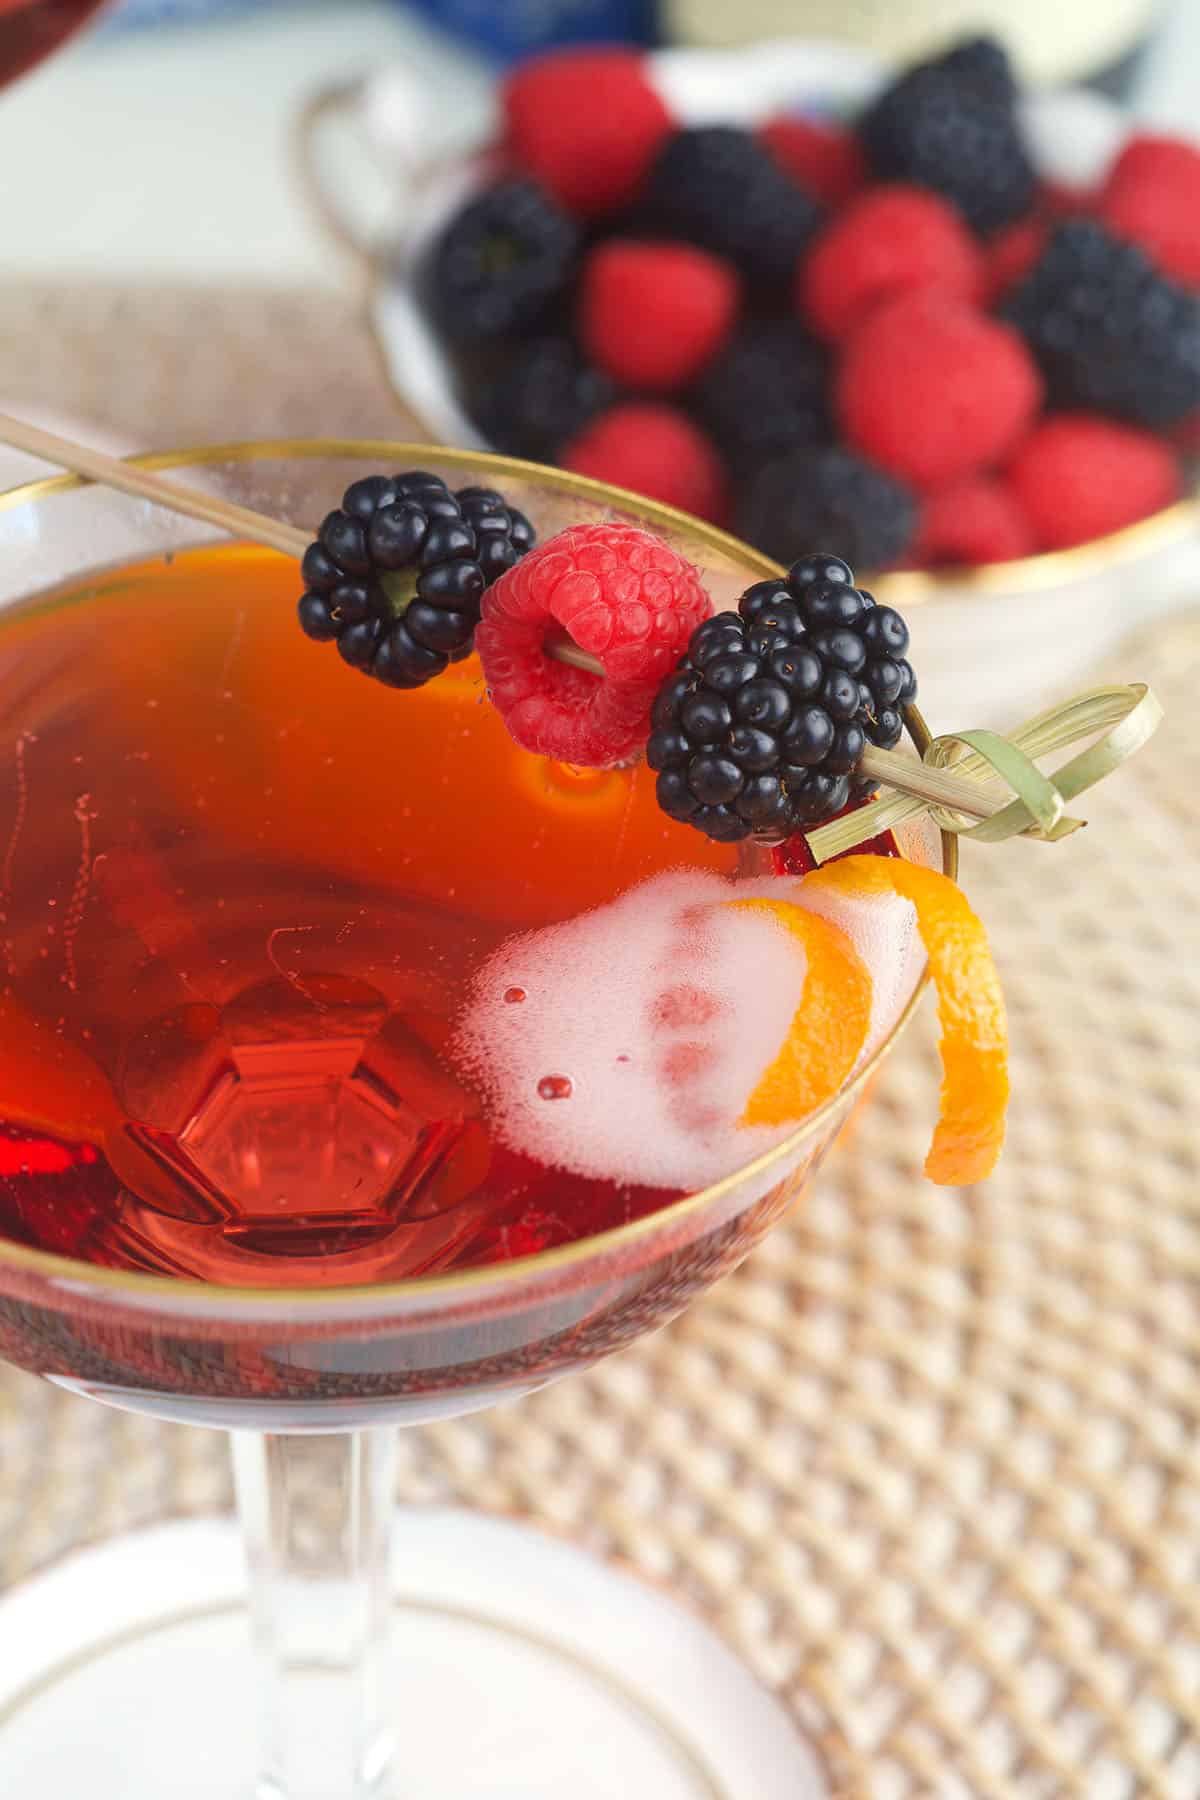 Berries and an orange peel garnish a glass of Kir Royale.